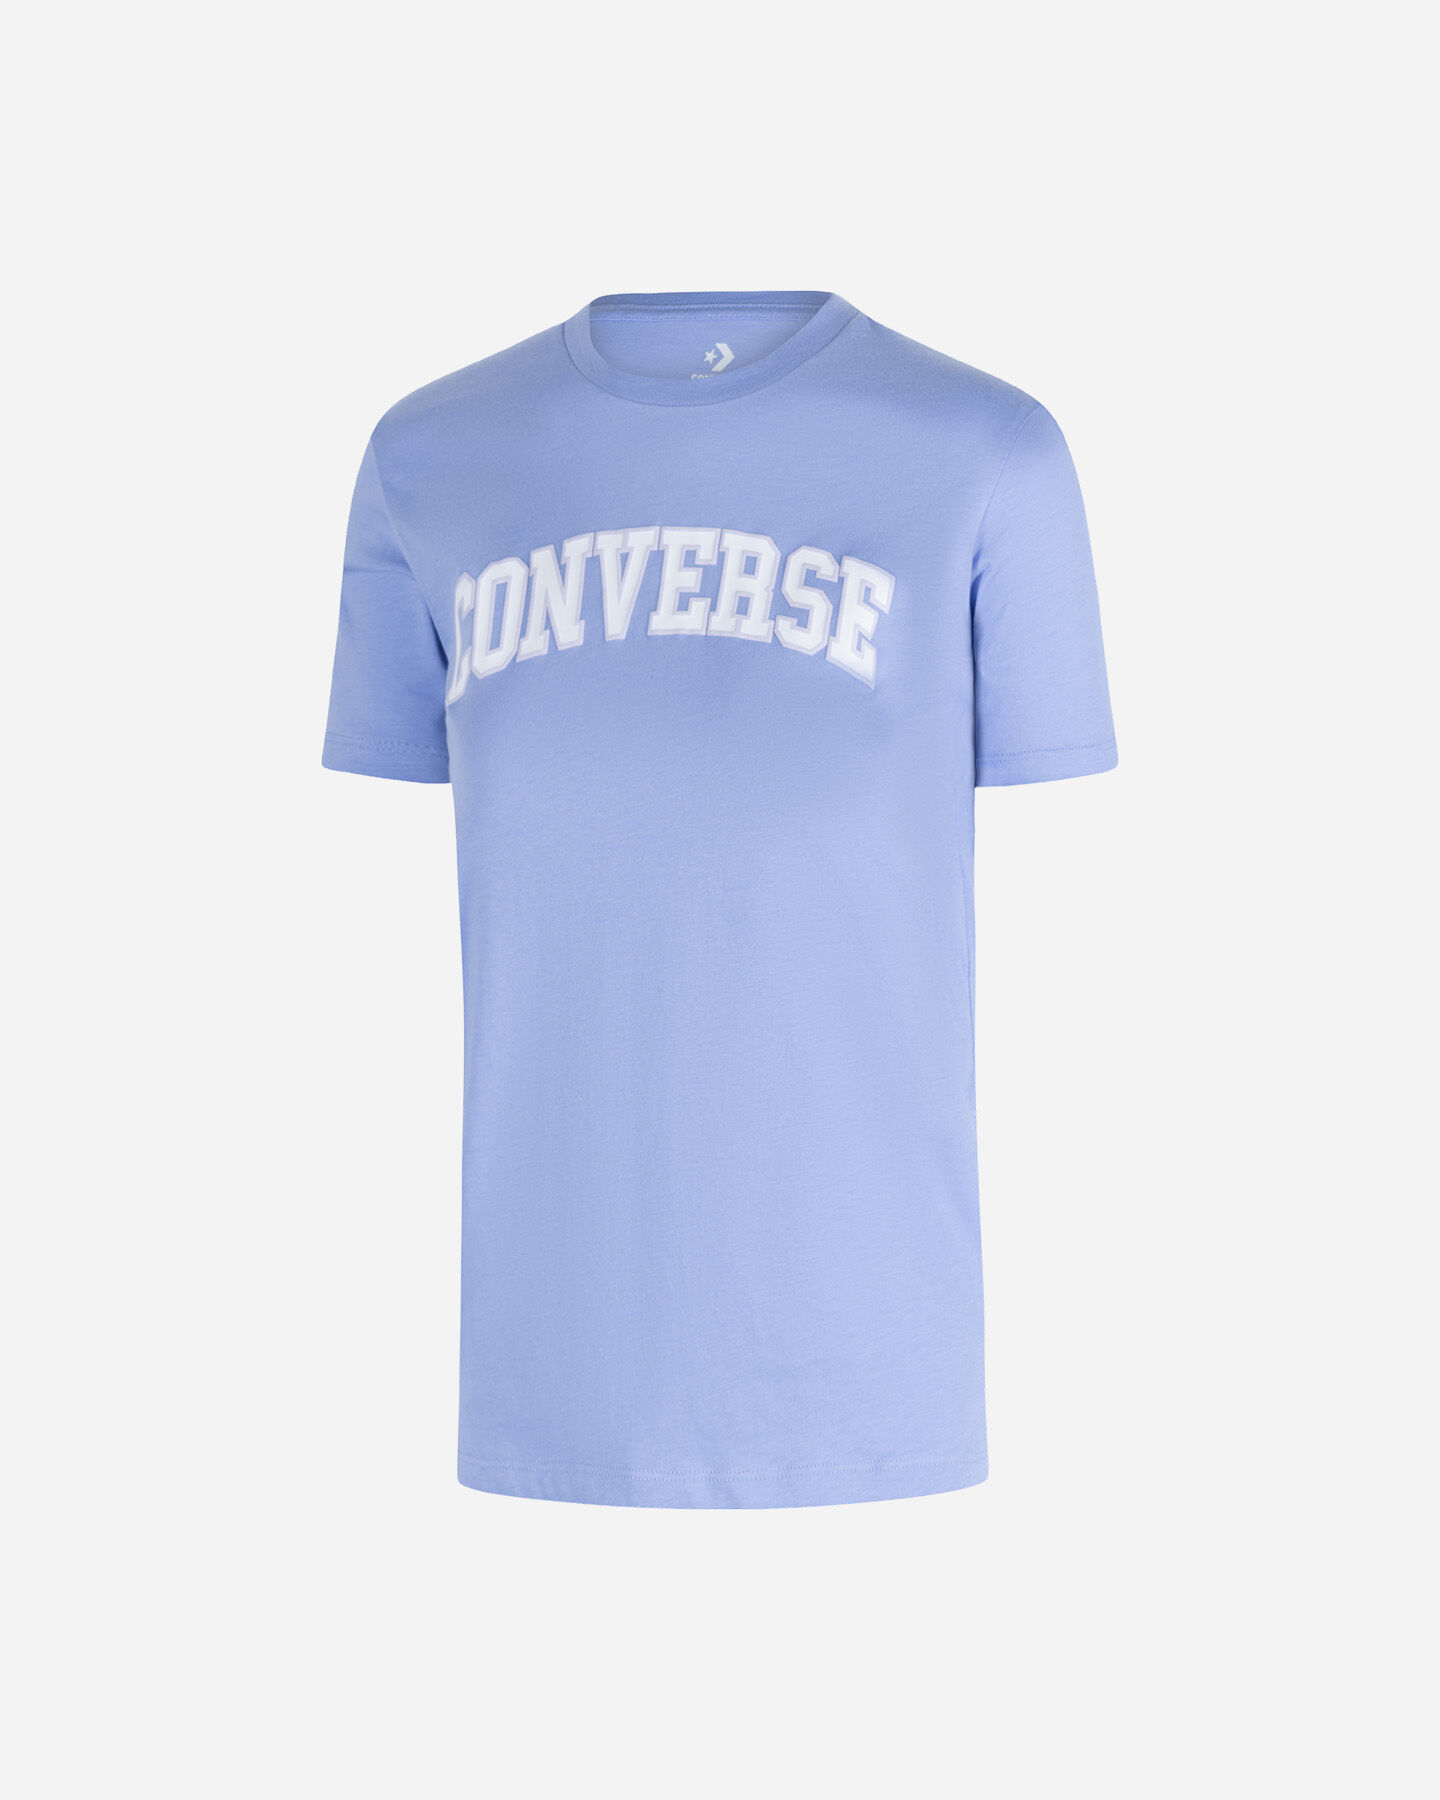  T-Shirt CONVERSE REGULAR ULTRAVIOLET W S5571717|504|L scatto 0